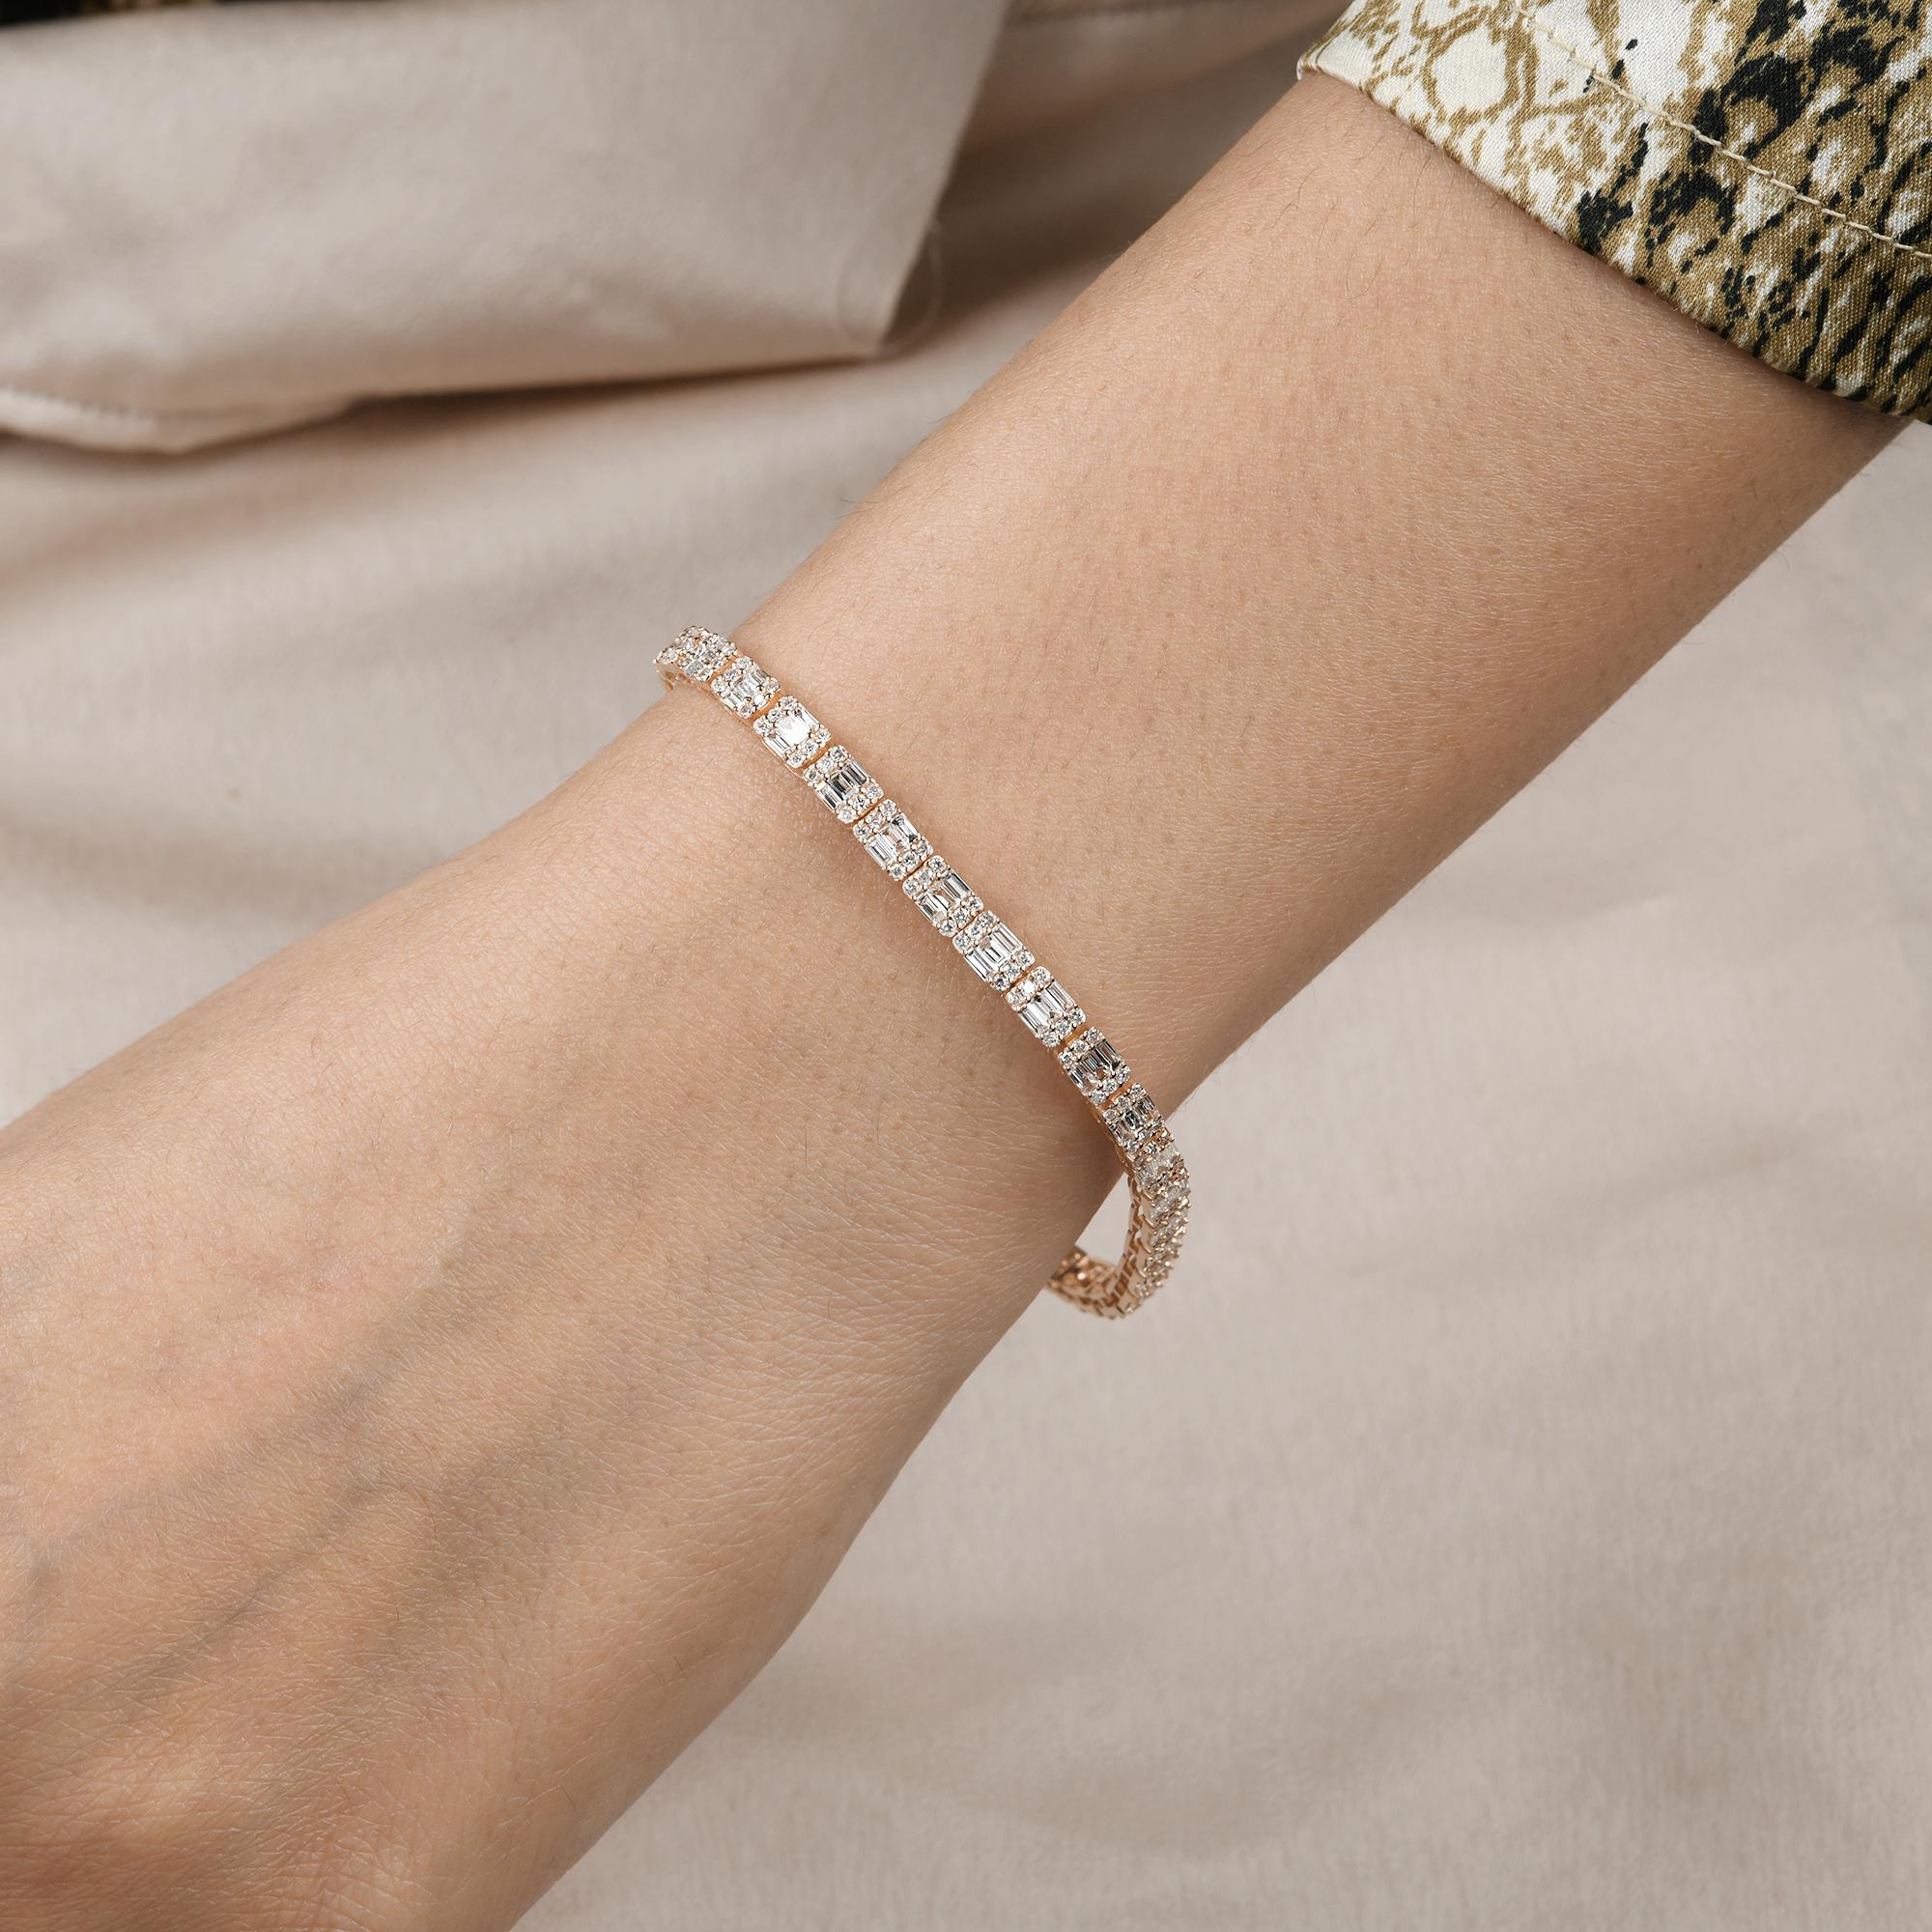 1.60ct 18ct white gold tennis bracelet guaranteed g/h colour si purity natural diamonds